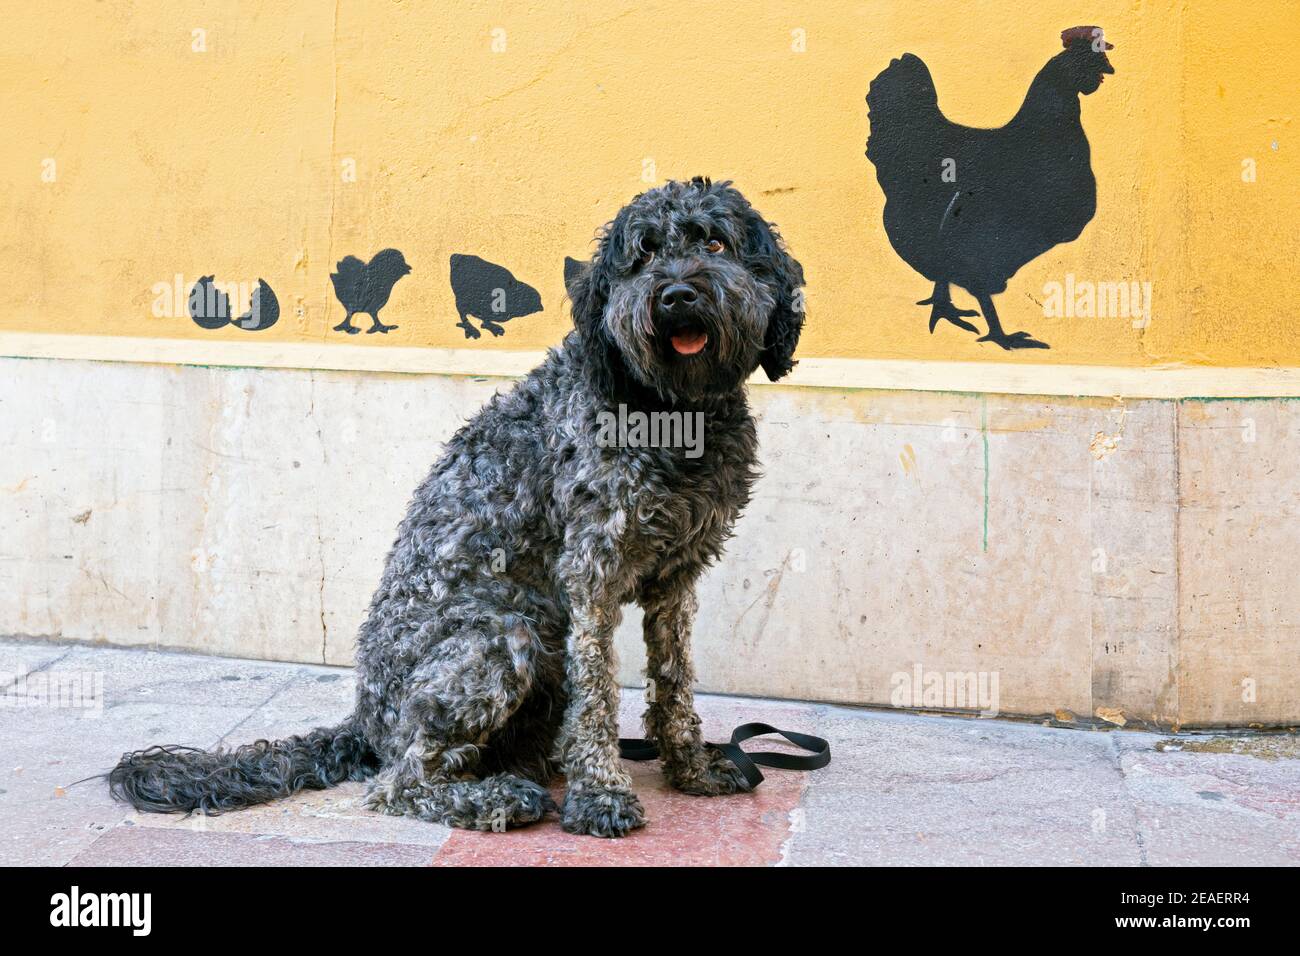 Europe, Spain, Leon, Plaza Torres de Omana, Portuguese Water Dog sitting by chicken graffiti Stock Photo